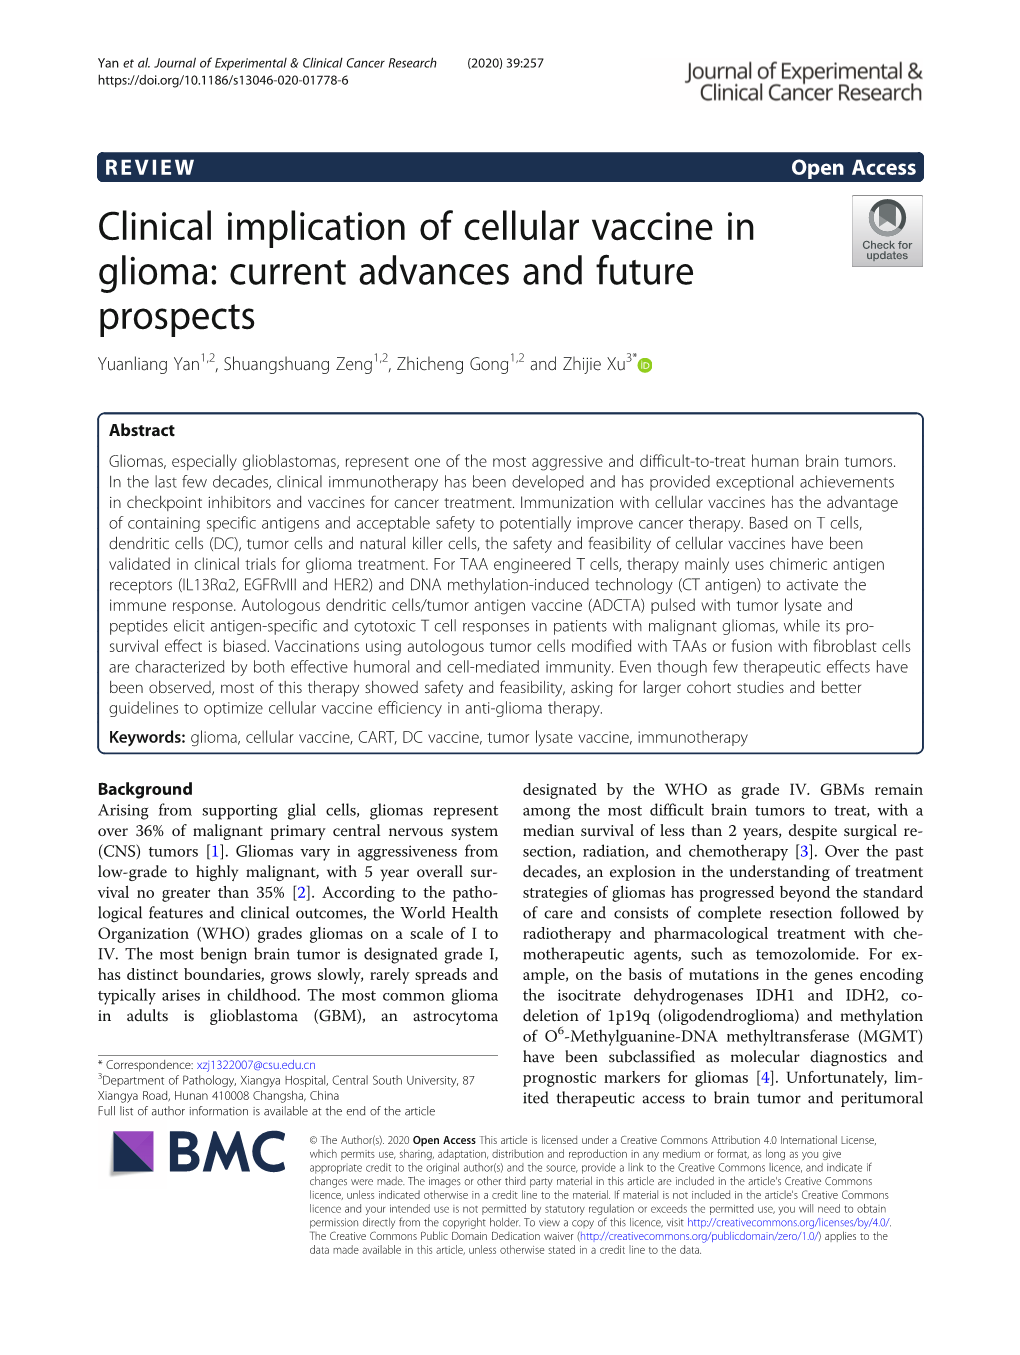 Clinical Implication of Cellular Vaccine in Glioma: Current Advances and Future Prospects Yuanliang Yan1,2, Shuangshuang Zeng1,2, Zhicheng Gong1,2 and Zhijie Xu3*